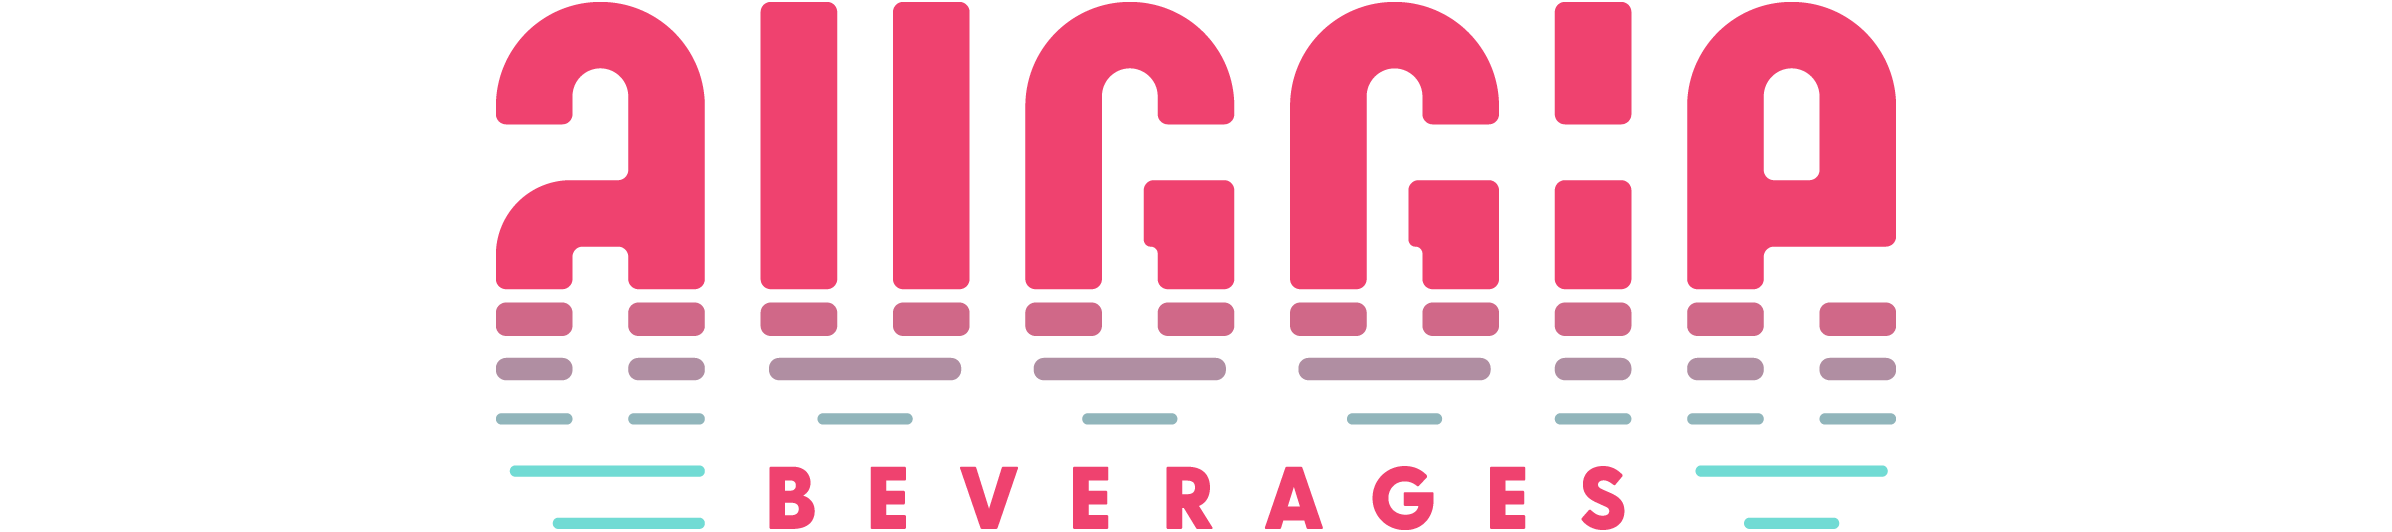 Auggie Beverages wordmark logo